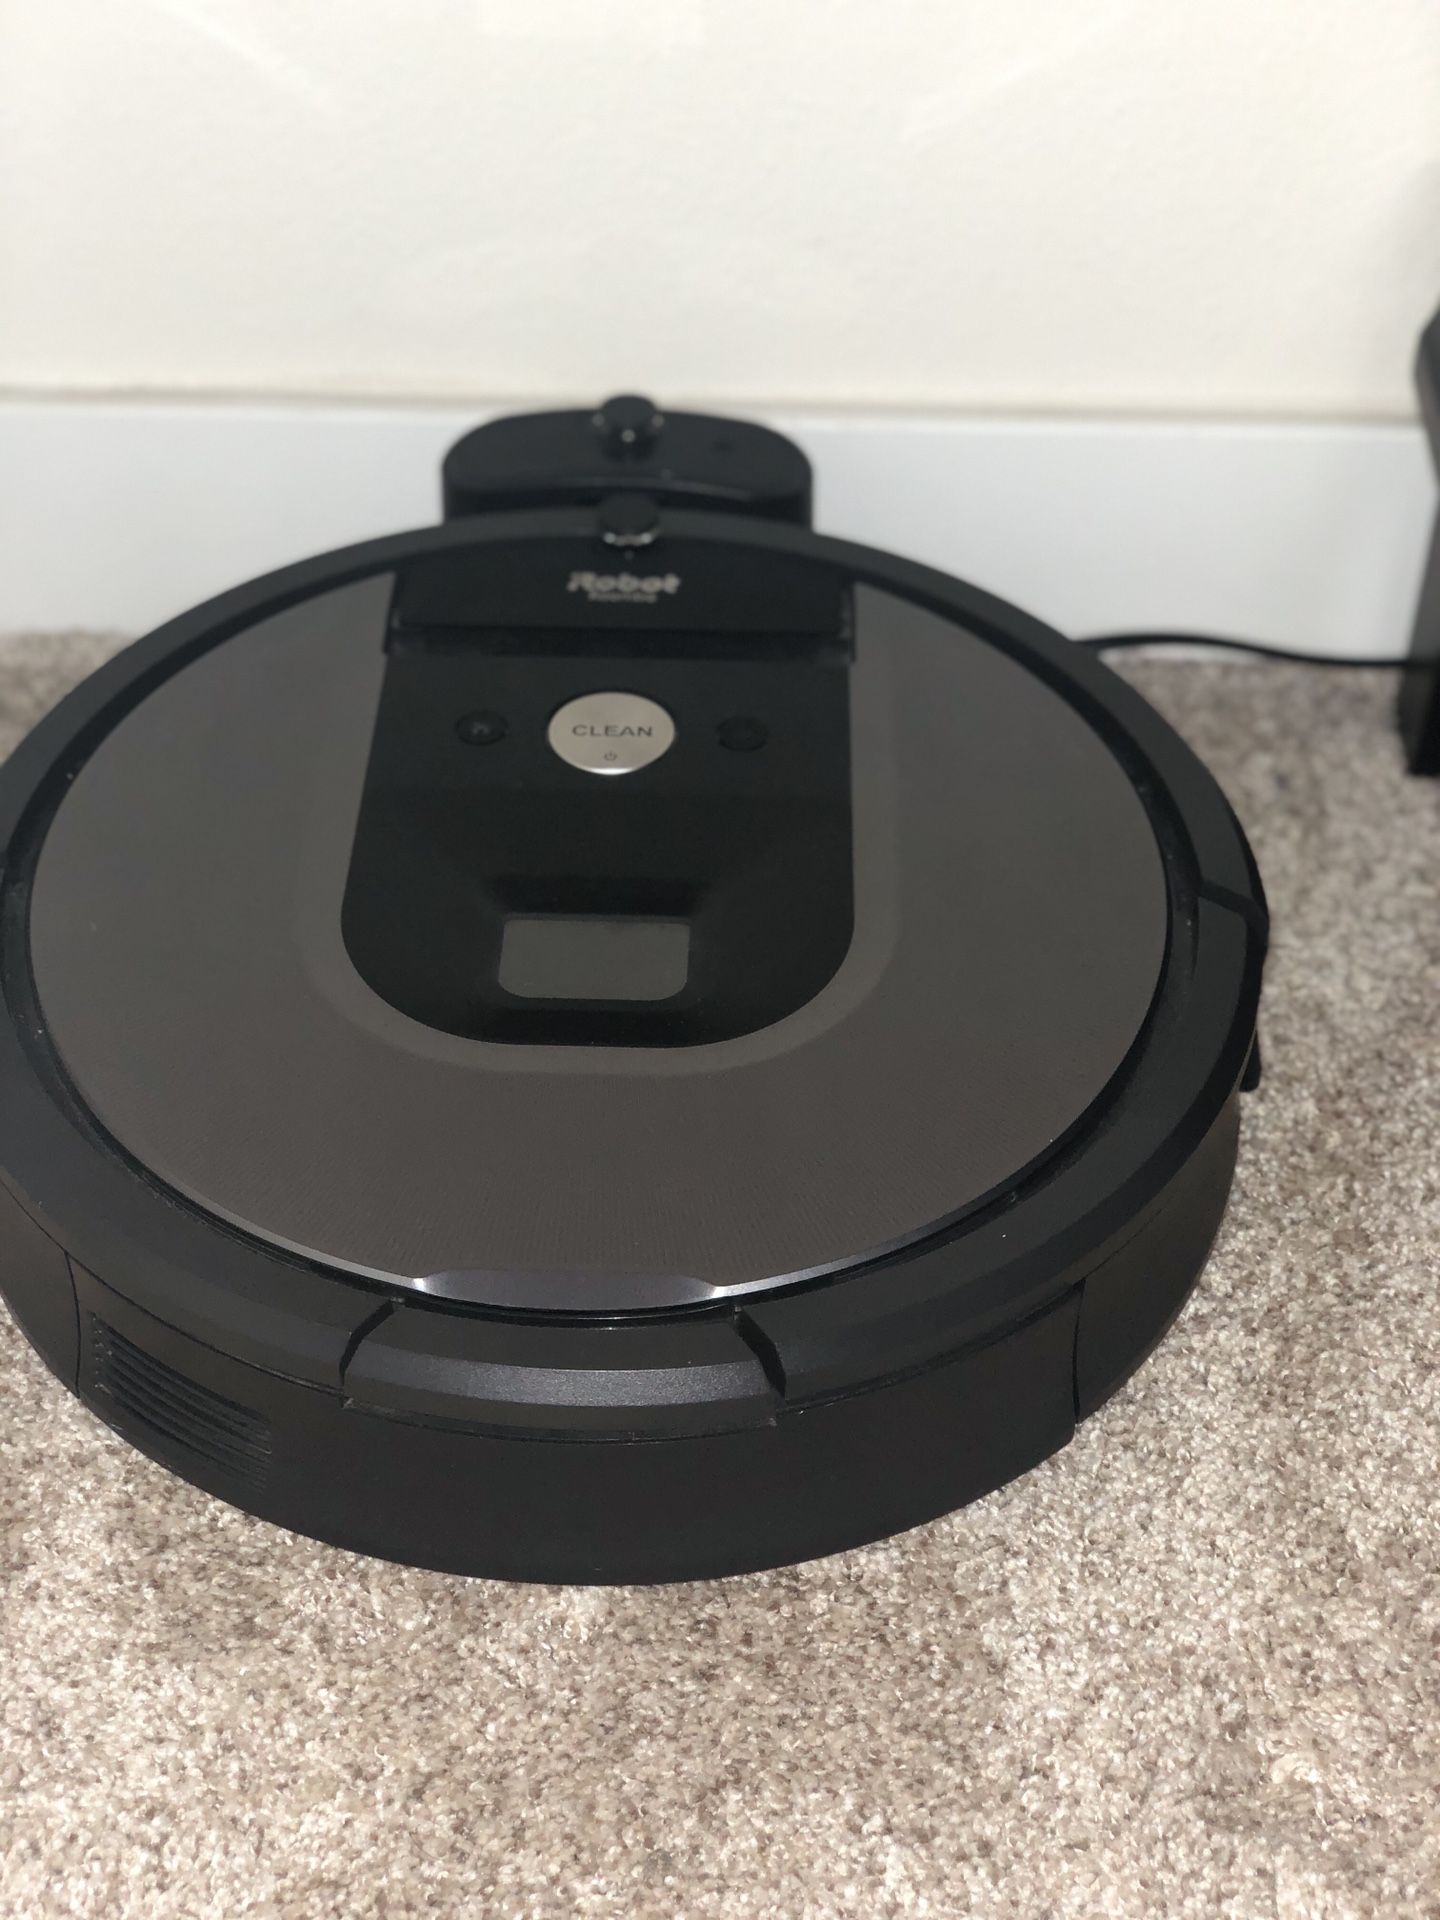 Irobot Roomba 960 vacuum cleaning robot